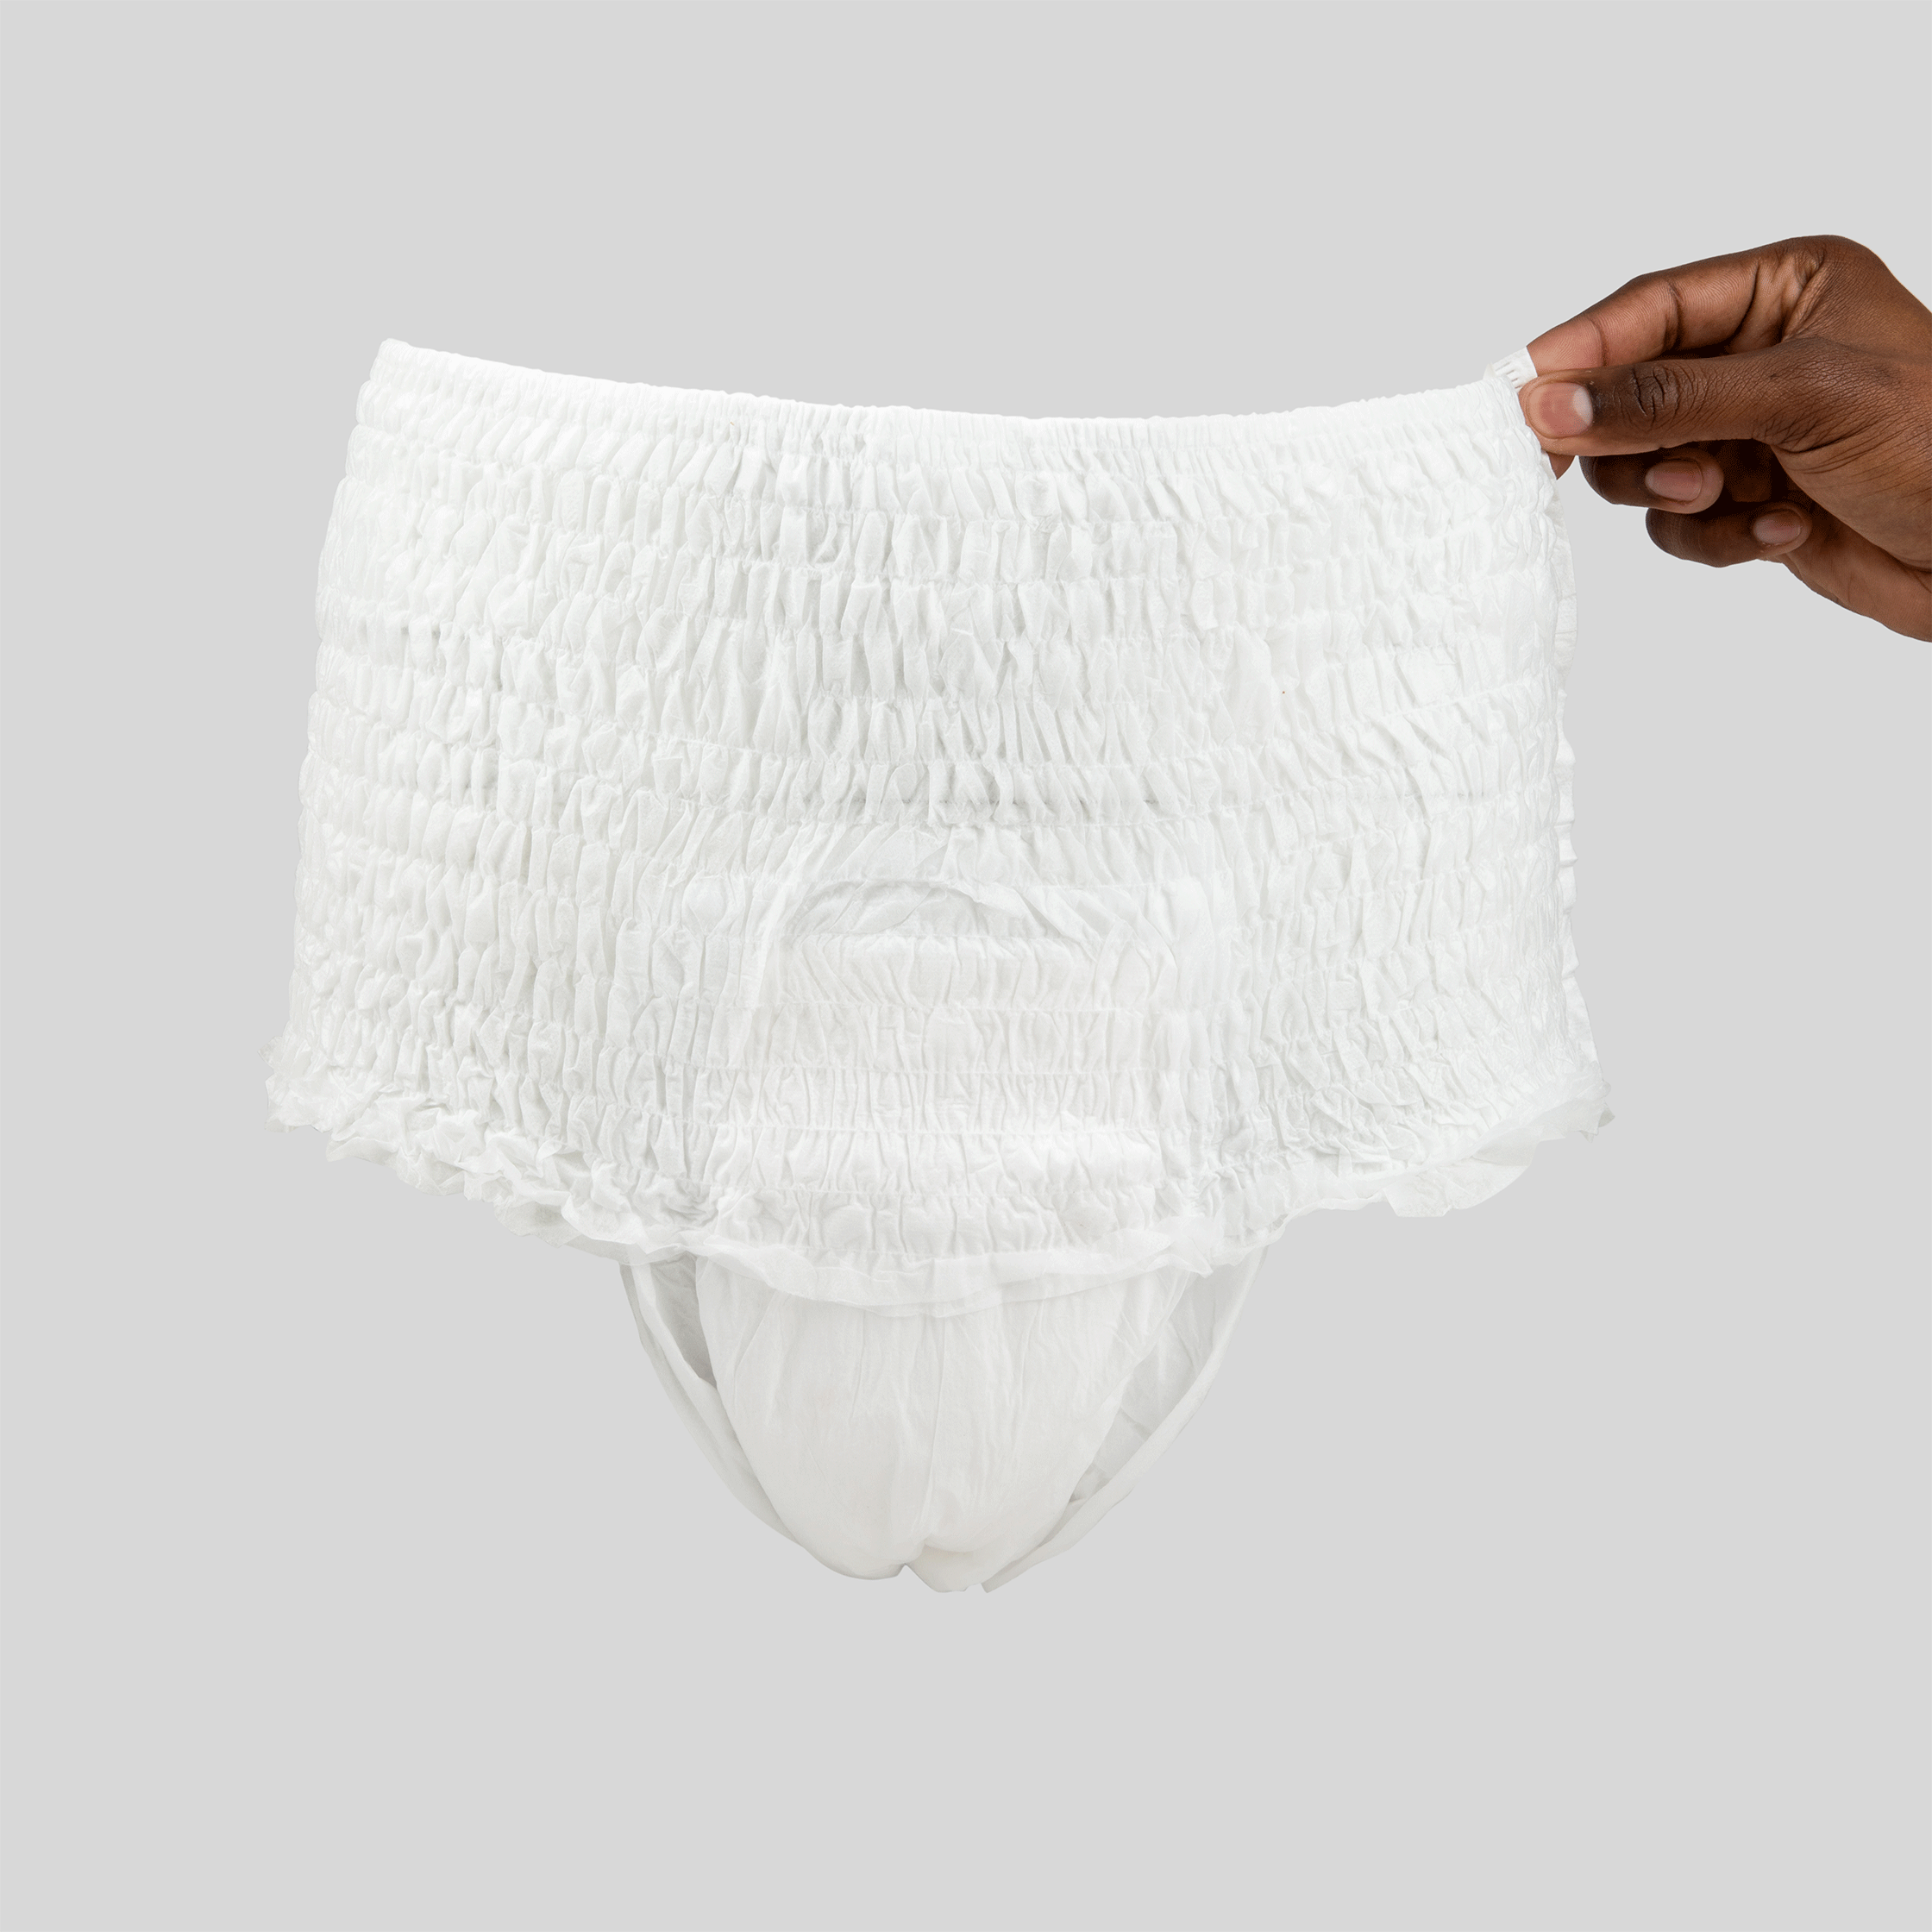 adult protective underwear